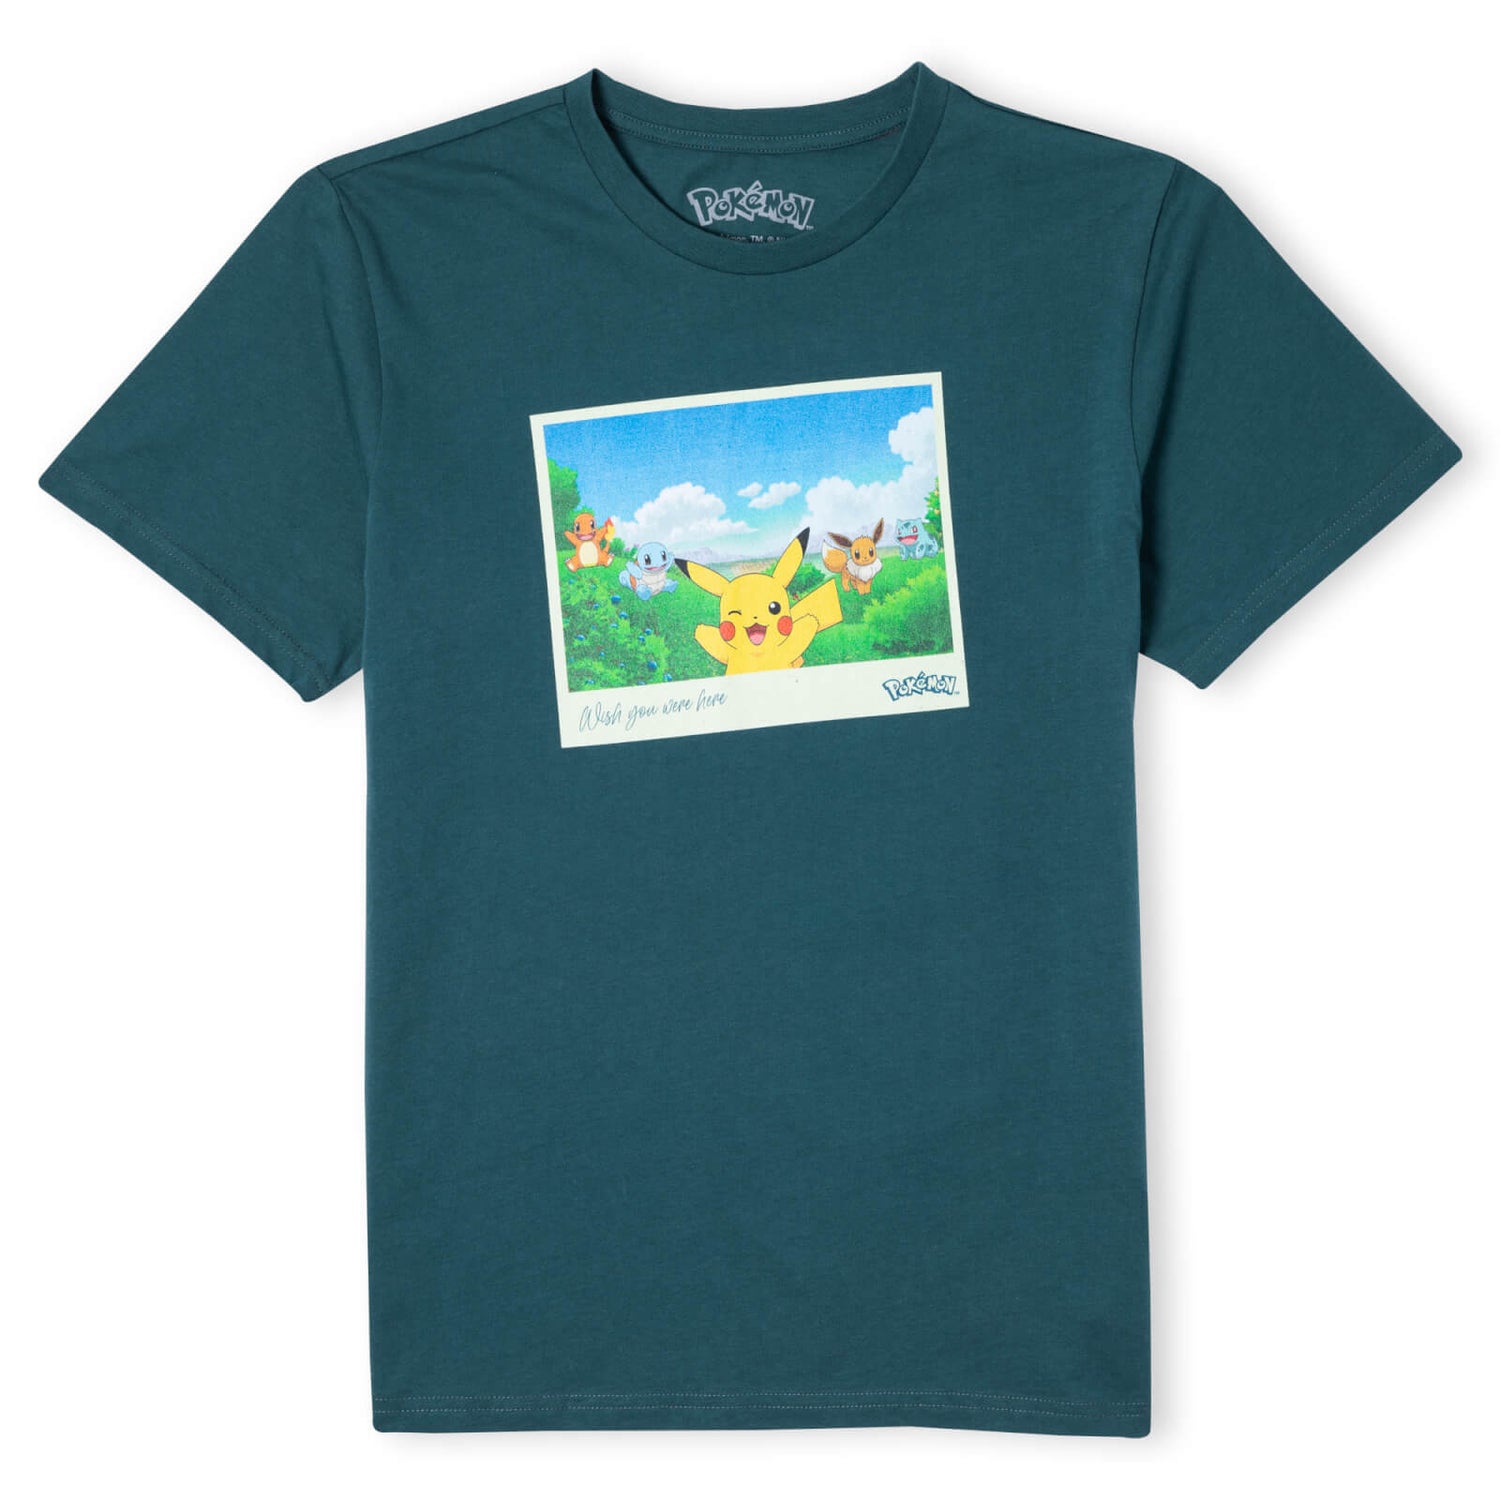 Pokémon Wish You Were Here Unisex T-Shirt - Green